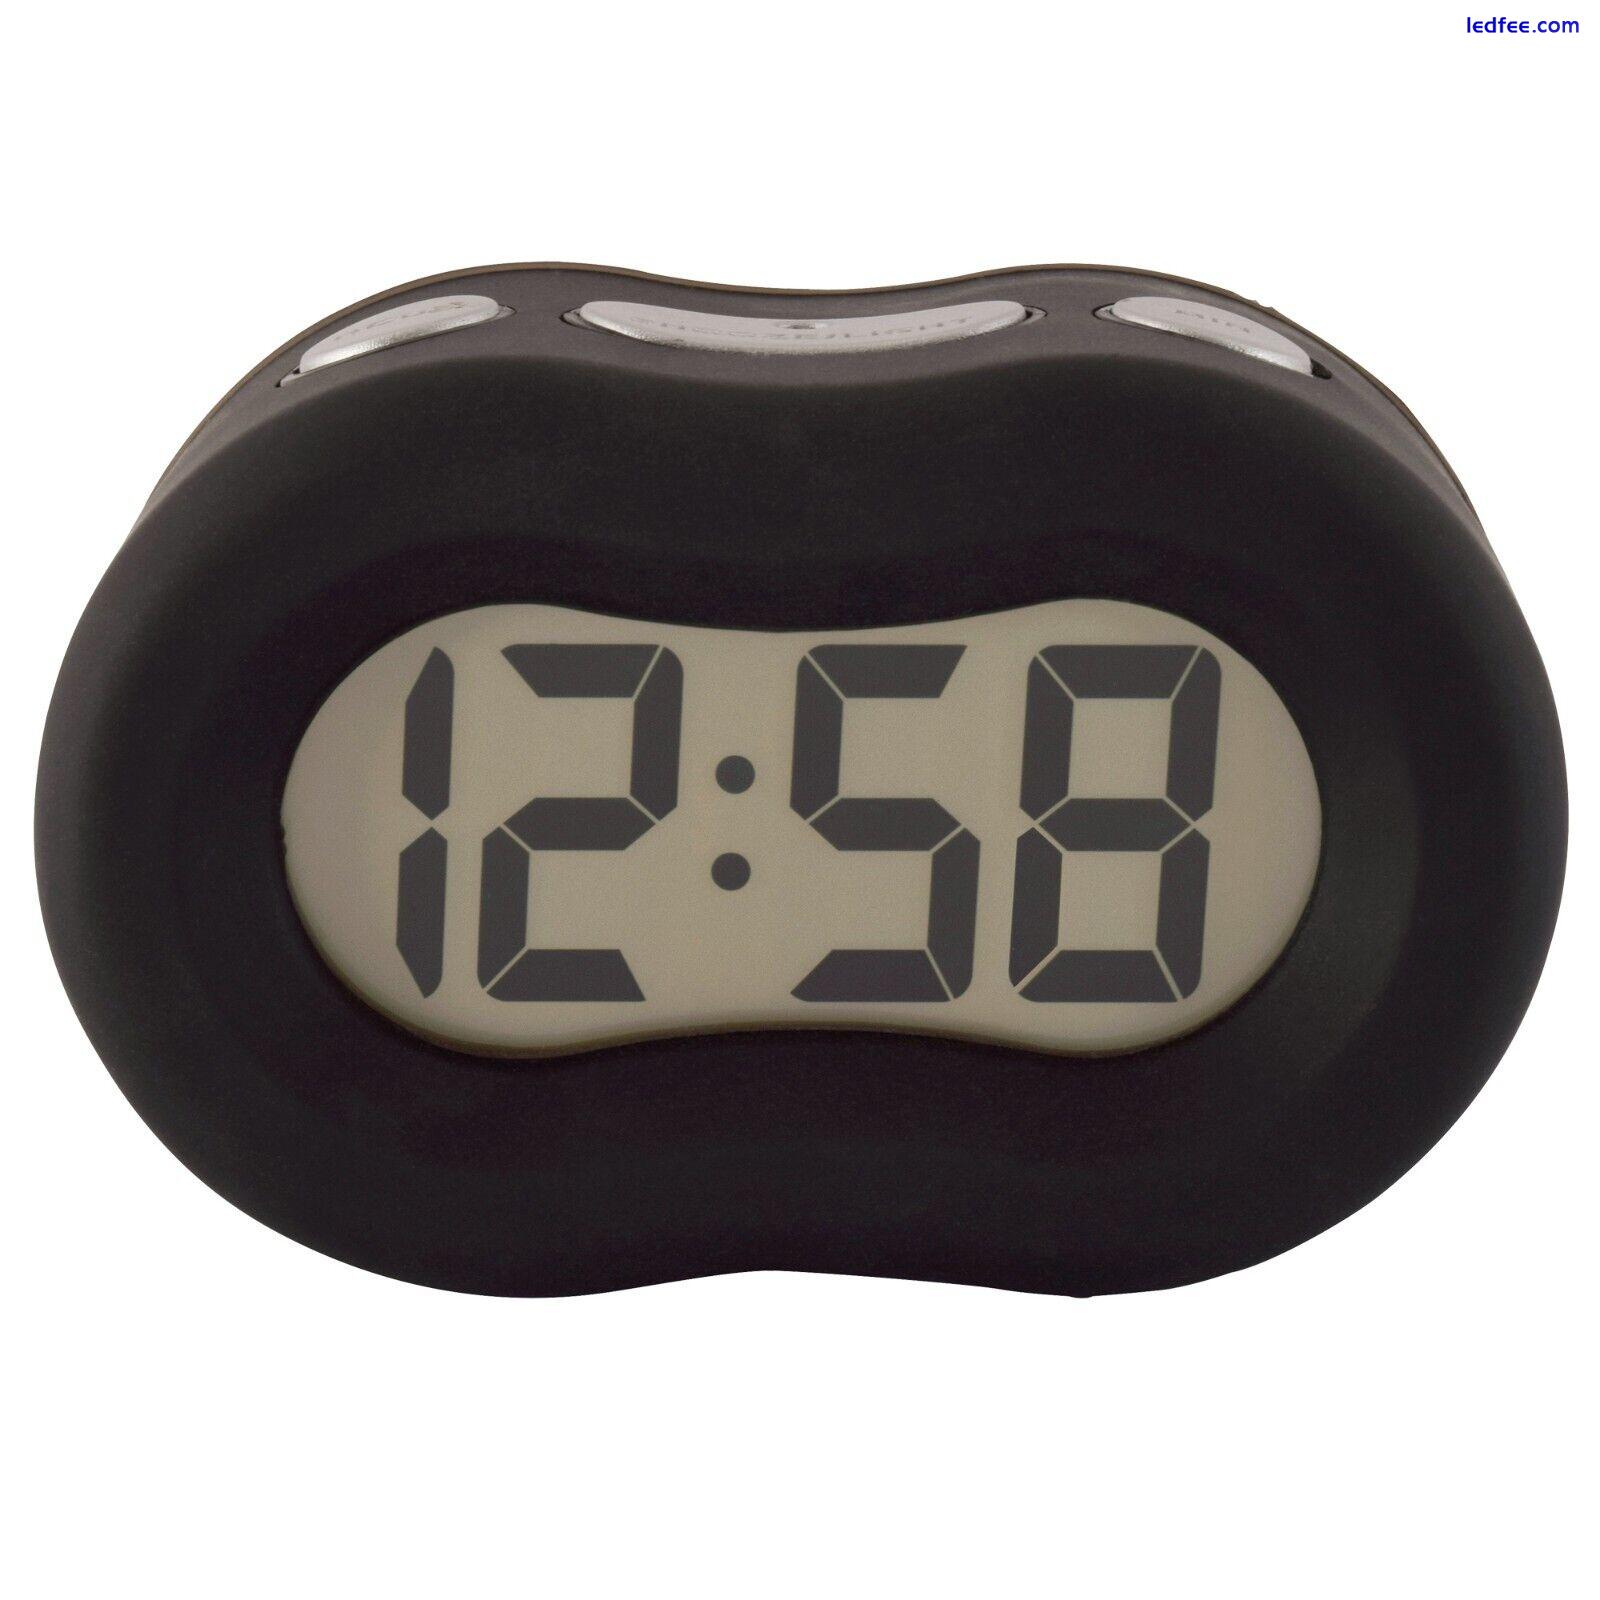 Acctim Vierra Digital Alarm Clock Smartlite� Crescendo Alarm Silicone Case 3 